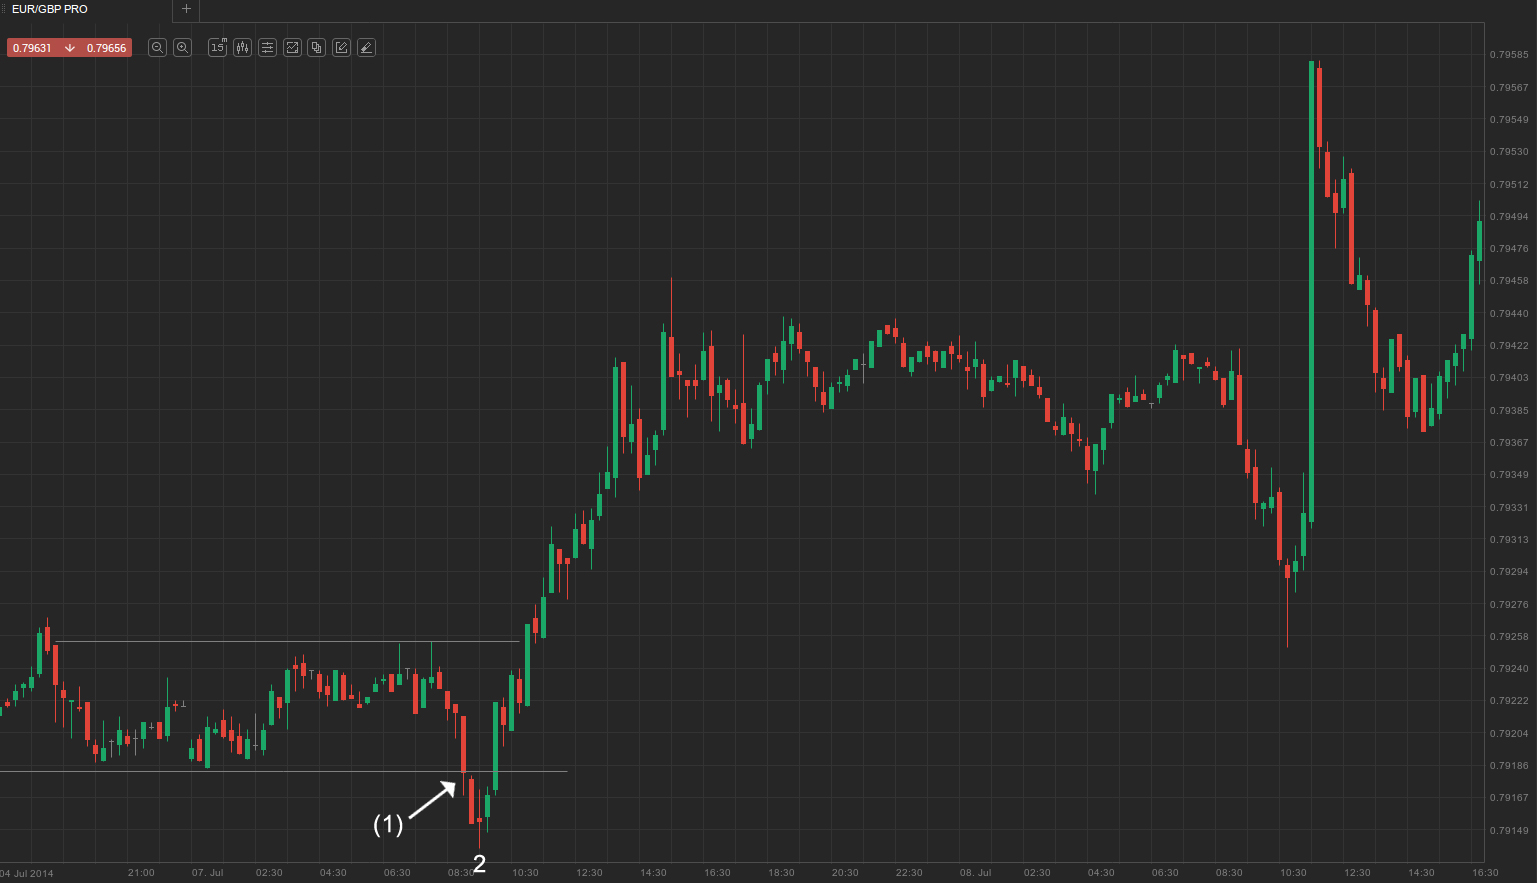 EUR--GBP failed breakout